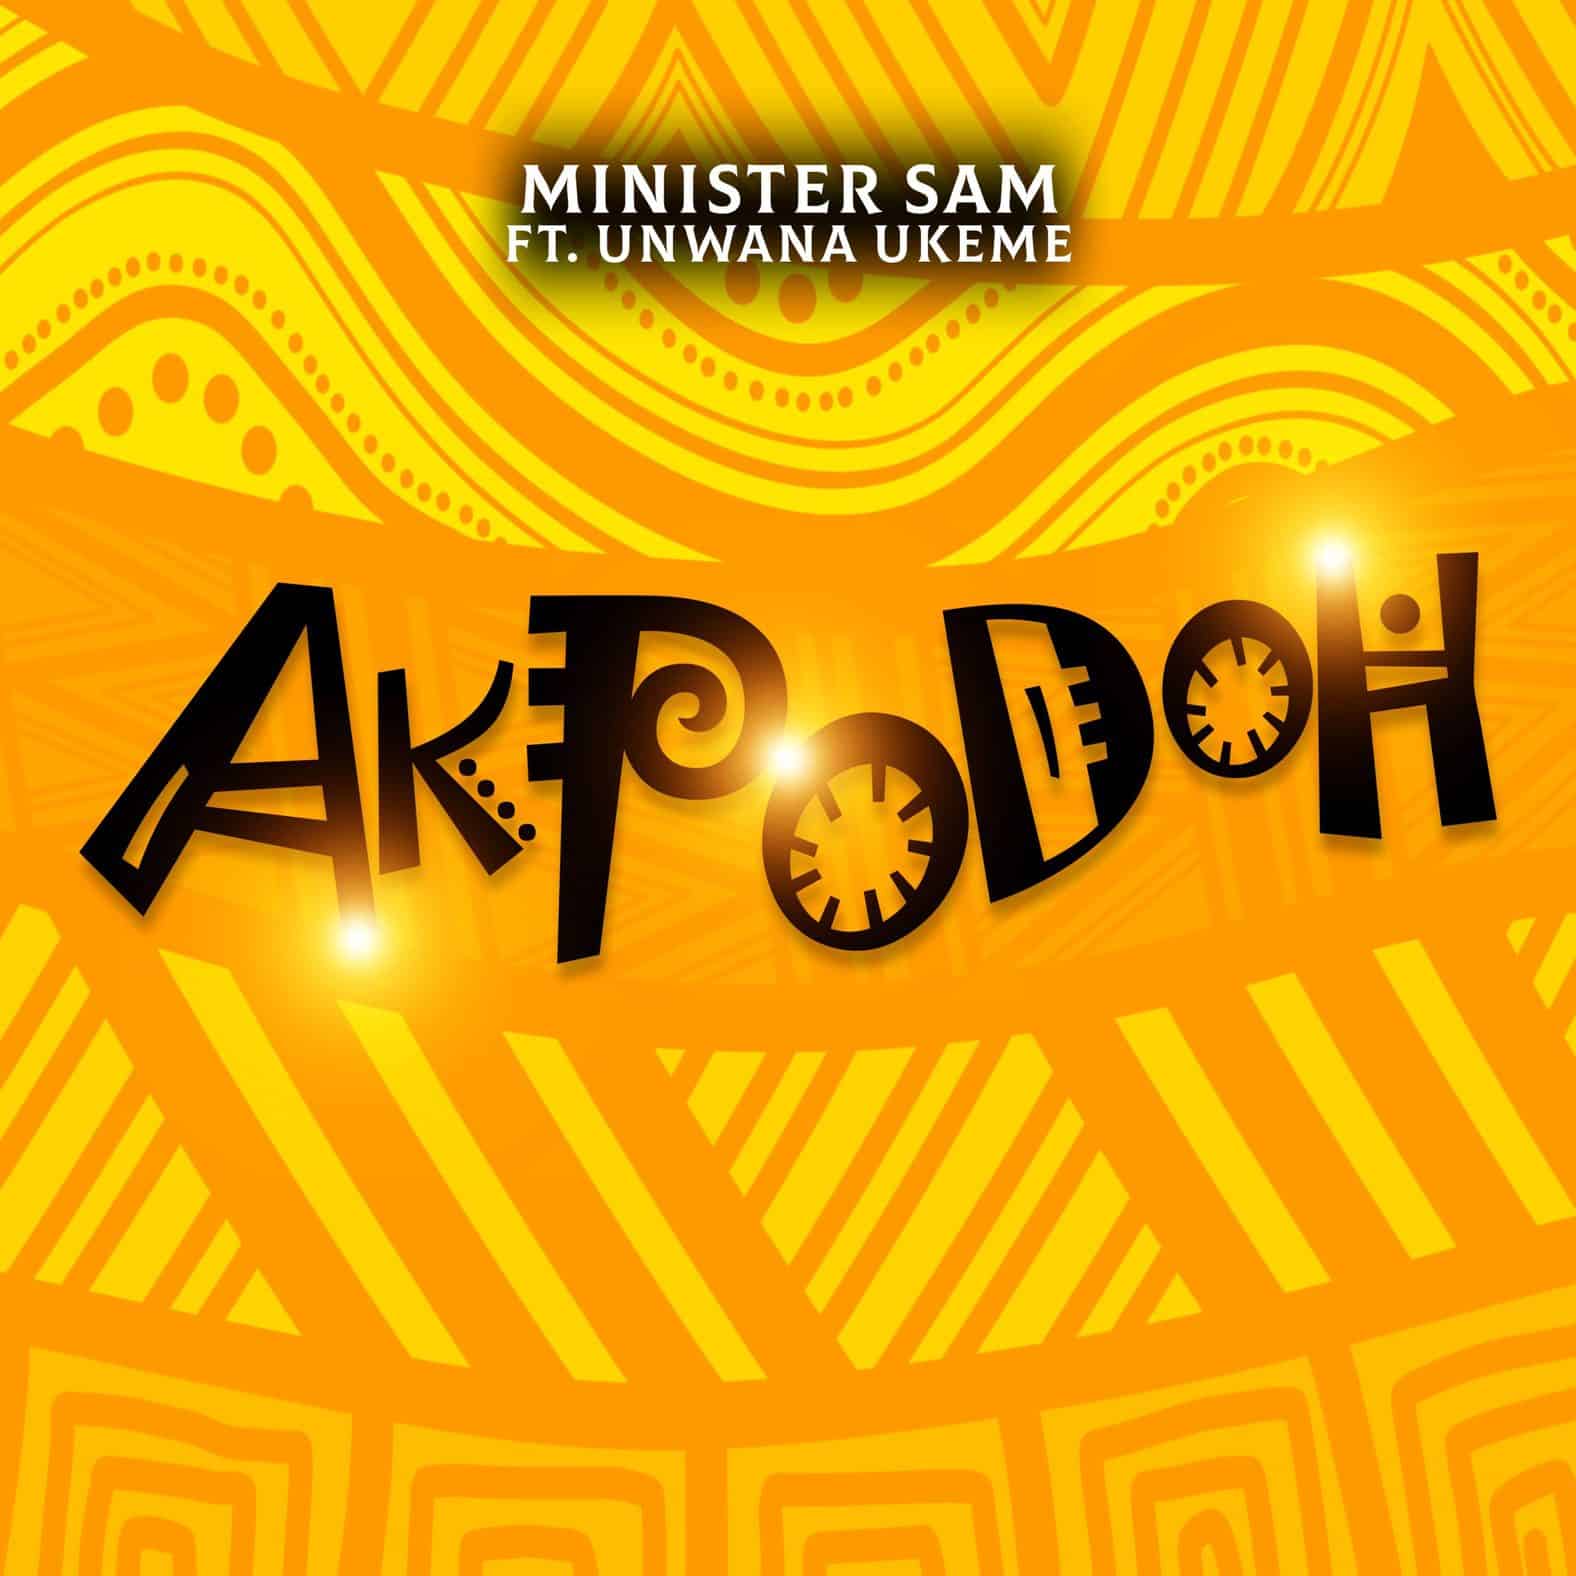 Download Mp3: Minister Sam - Akpodoh (If Not) ft Unwana Ukeme